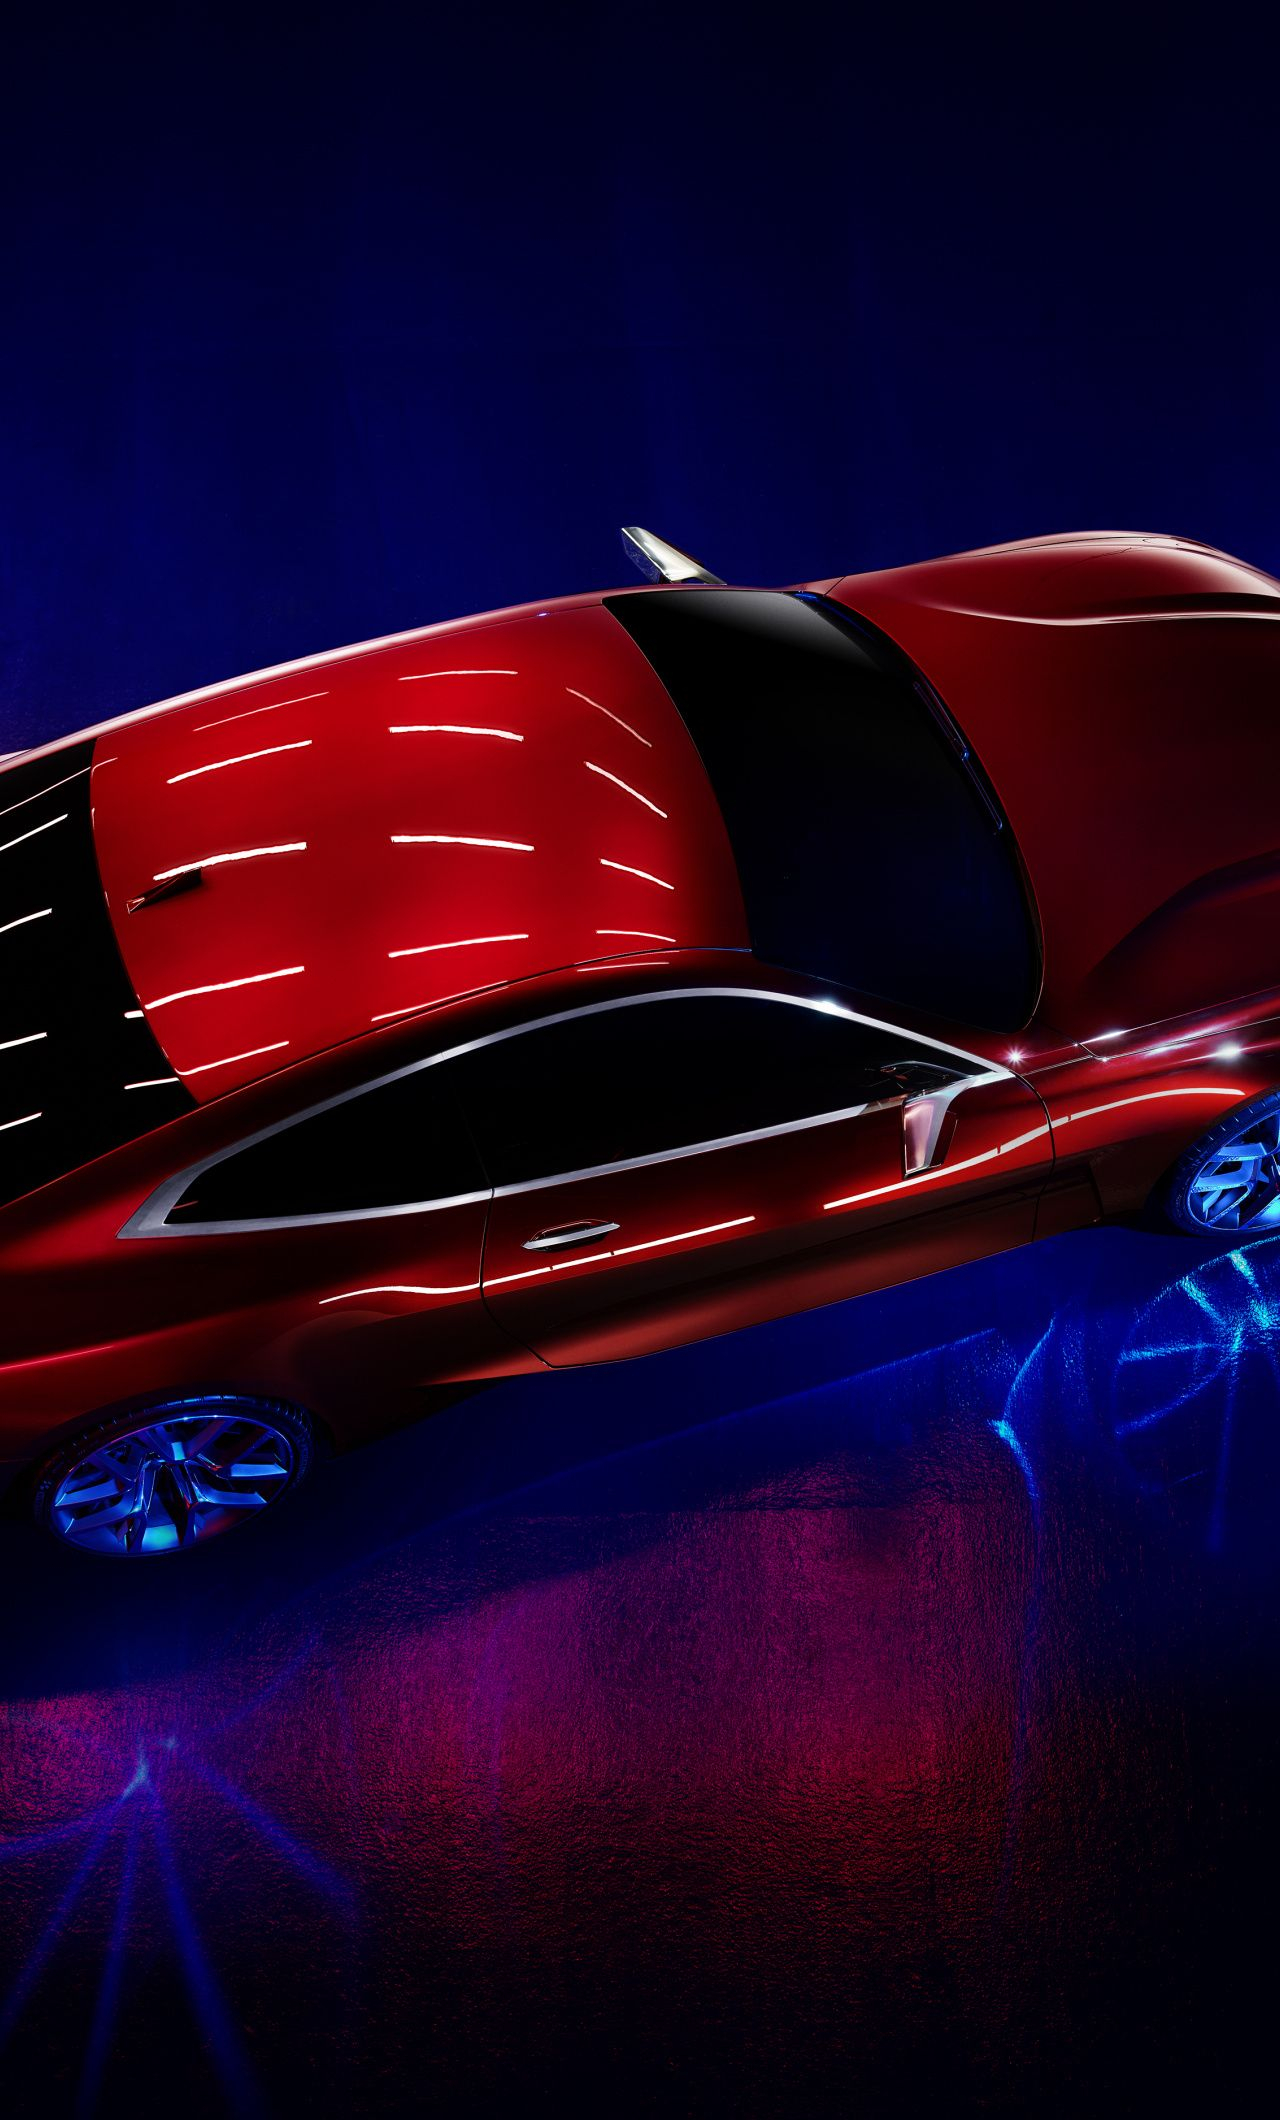 1280x2120 Top-view, BMW concept 4, red car wallpaper | Bmw concept, Car wallpapers, Red car